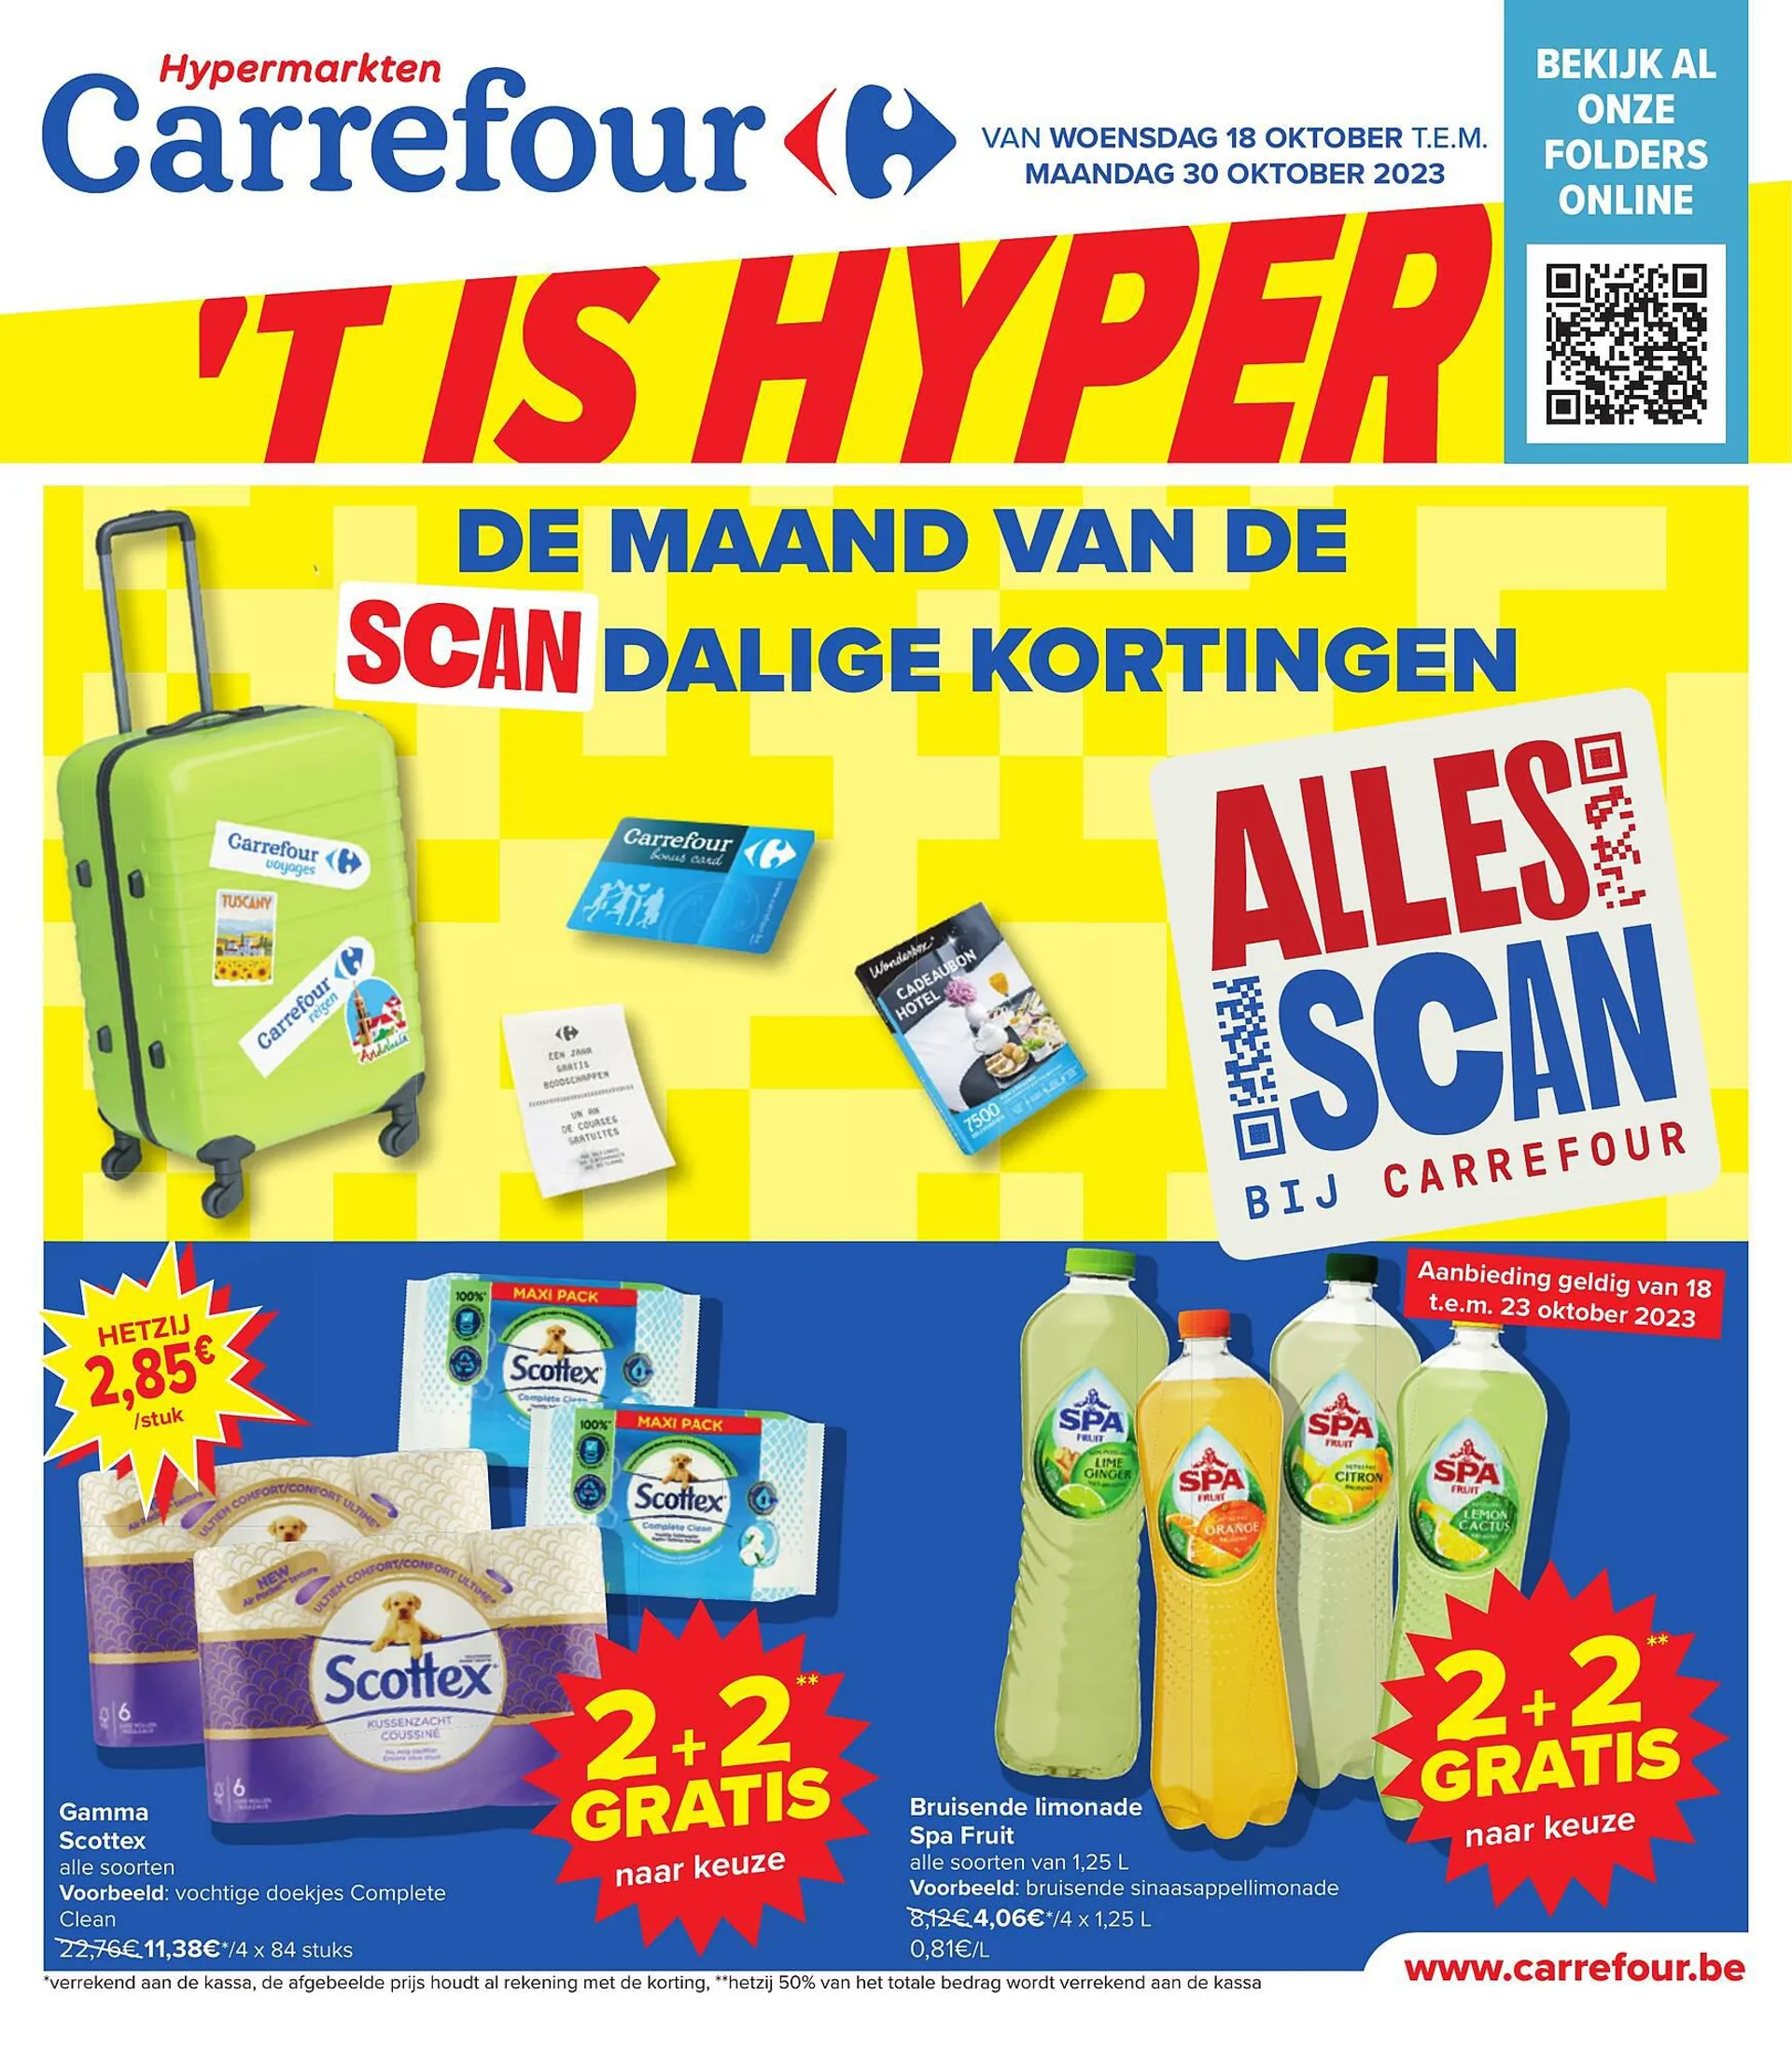 Hyper Carrefour Folder - 1